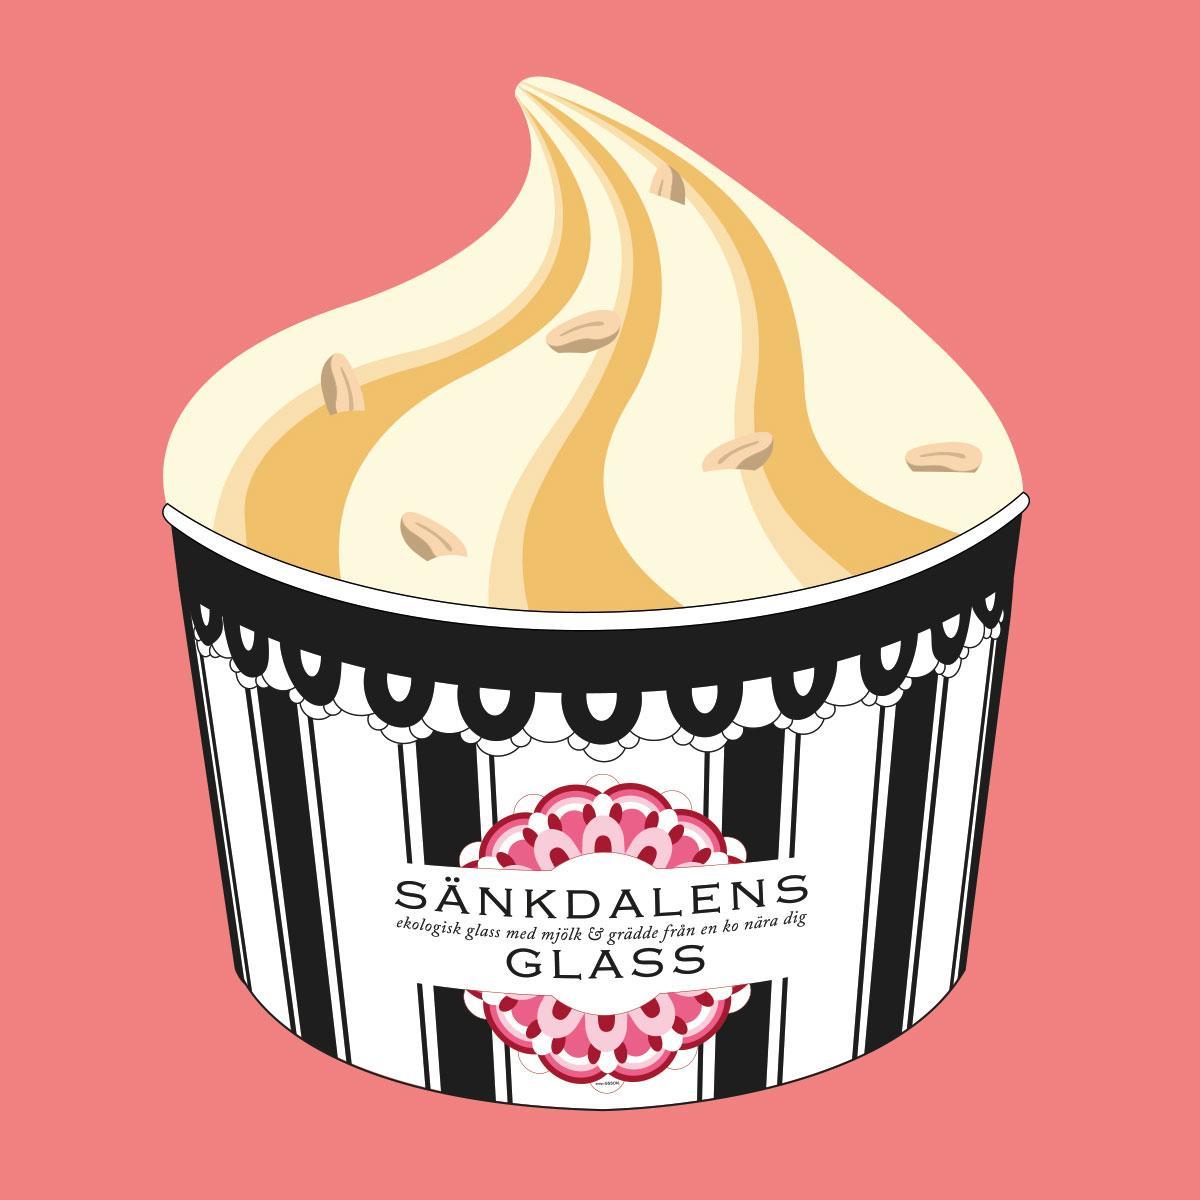 Sänkdalens glass's Peanut ice cream '